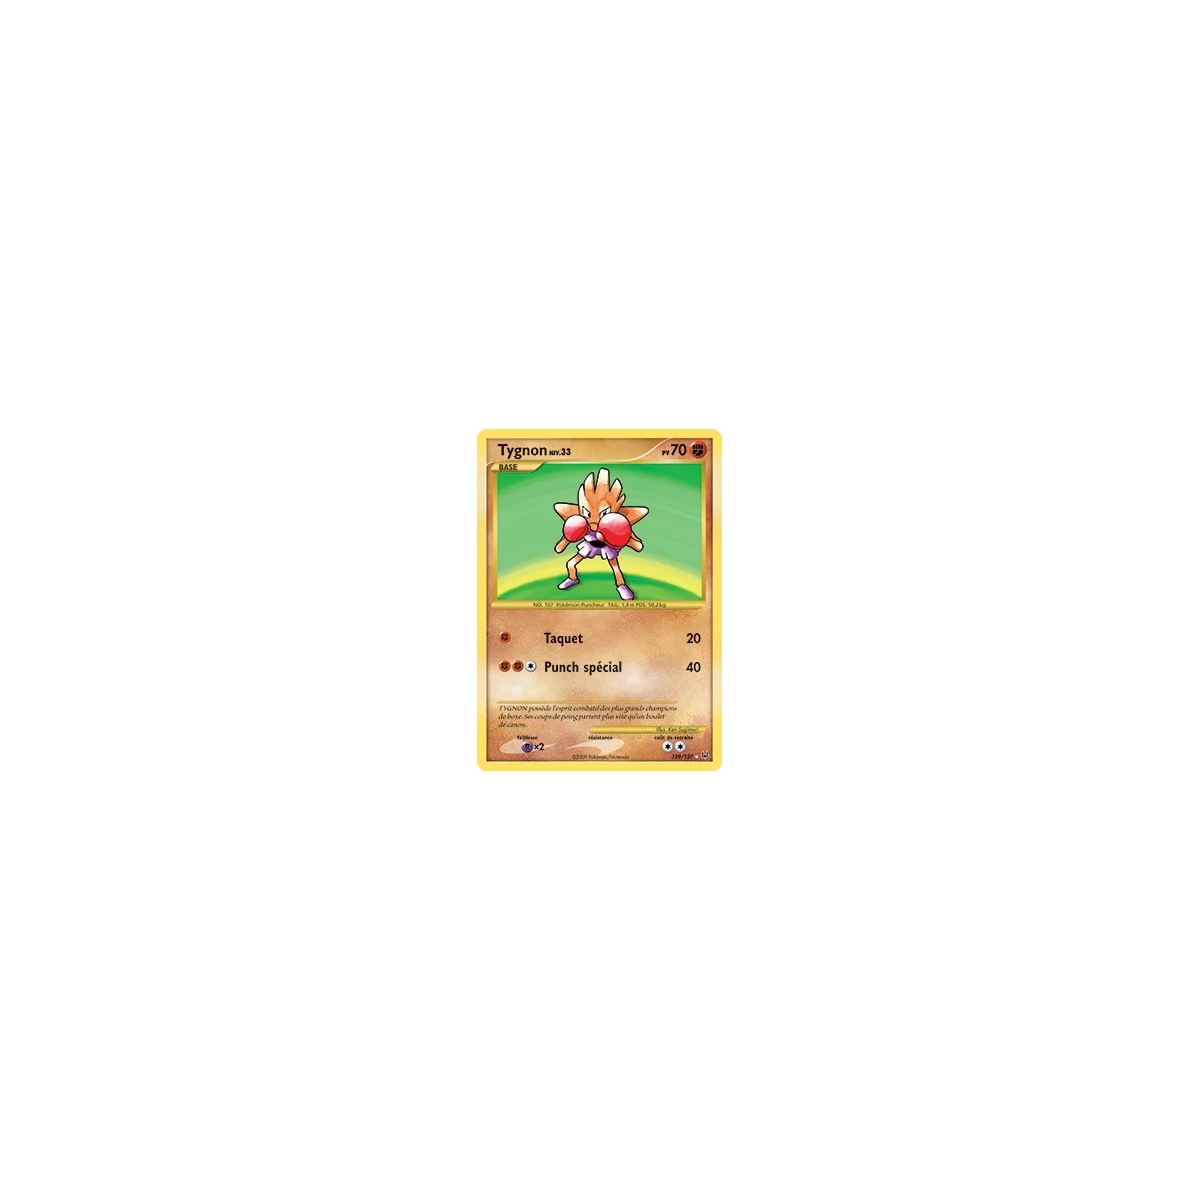 Tygnon 129/127 : Joyau Holographique rare NIV.X de l'extension Pokémon Platine